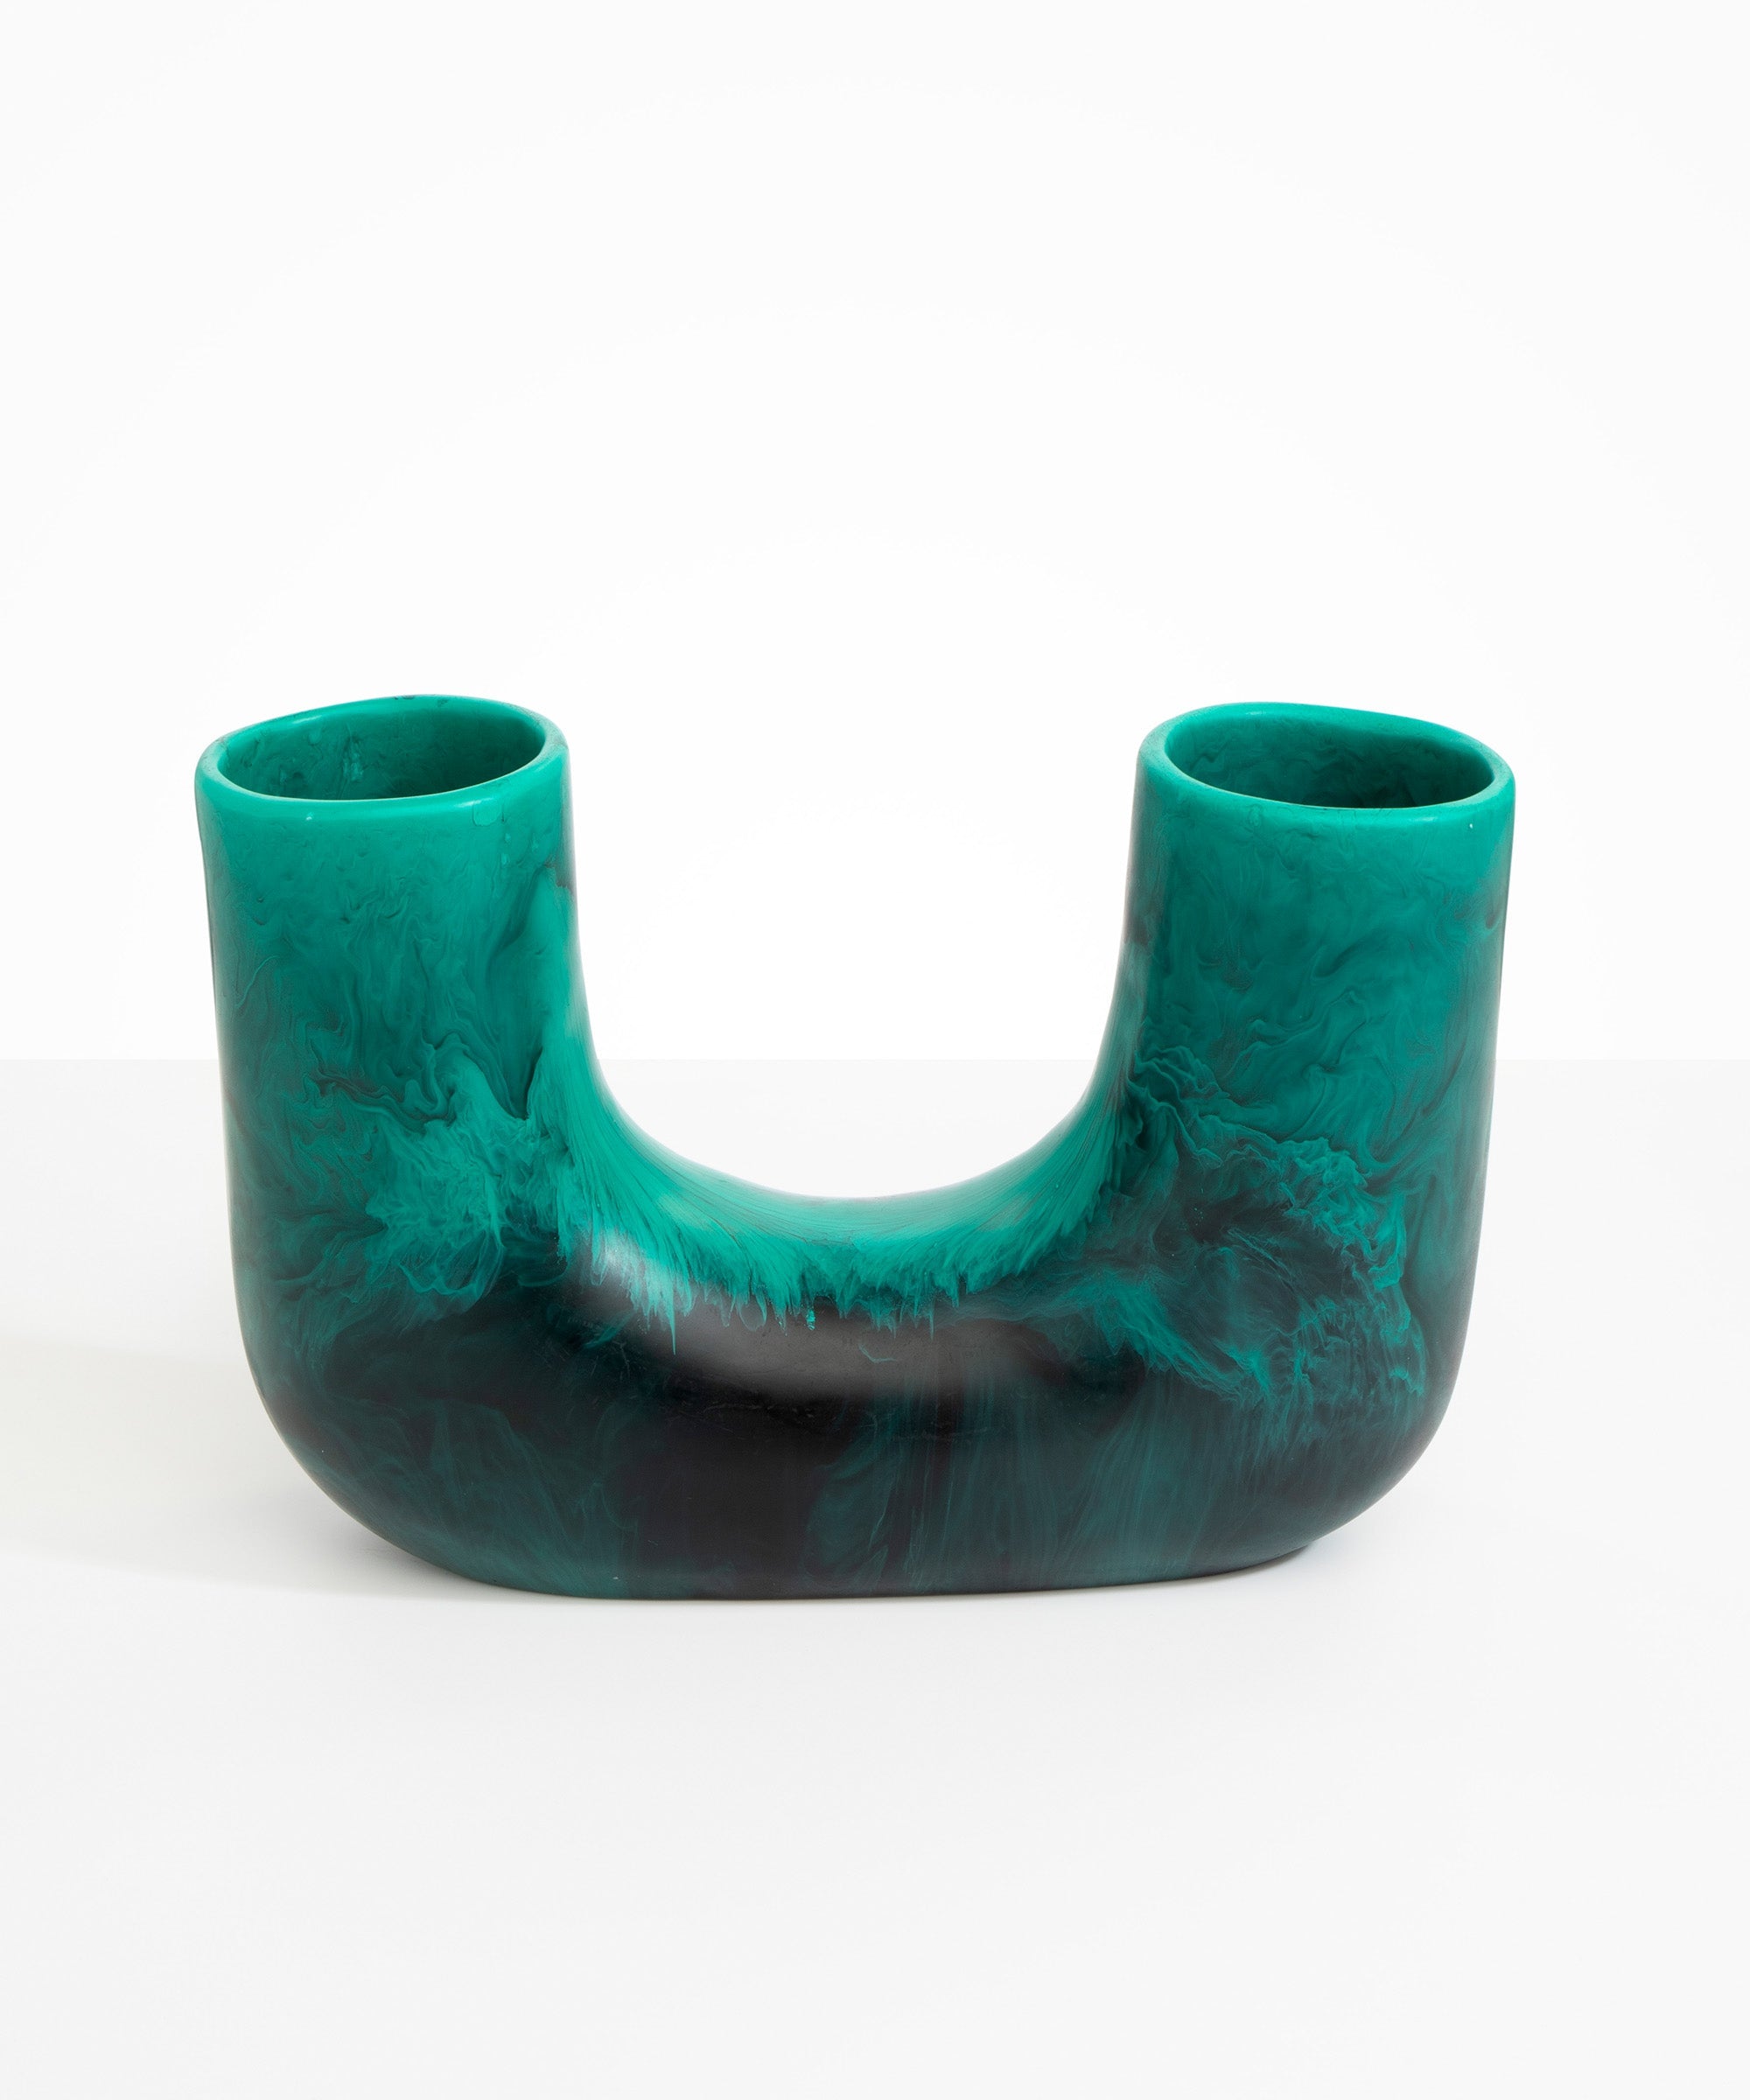 Dinosaur Designs Large Branch Vase Vases in Mineral Swirl color resin